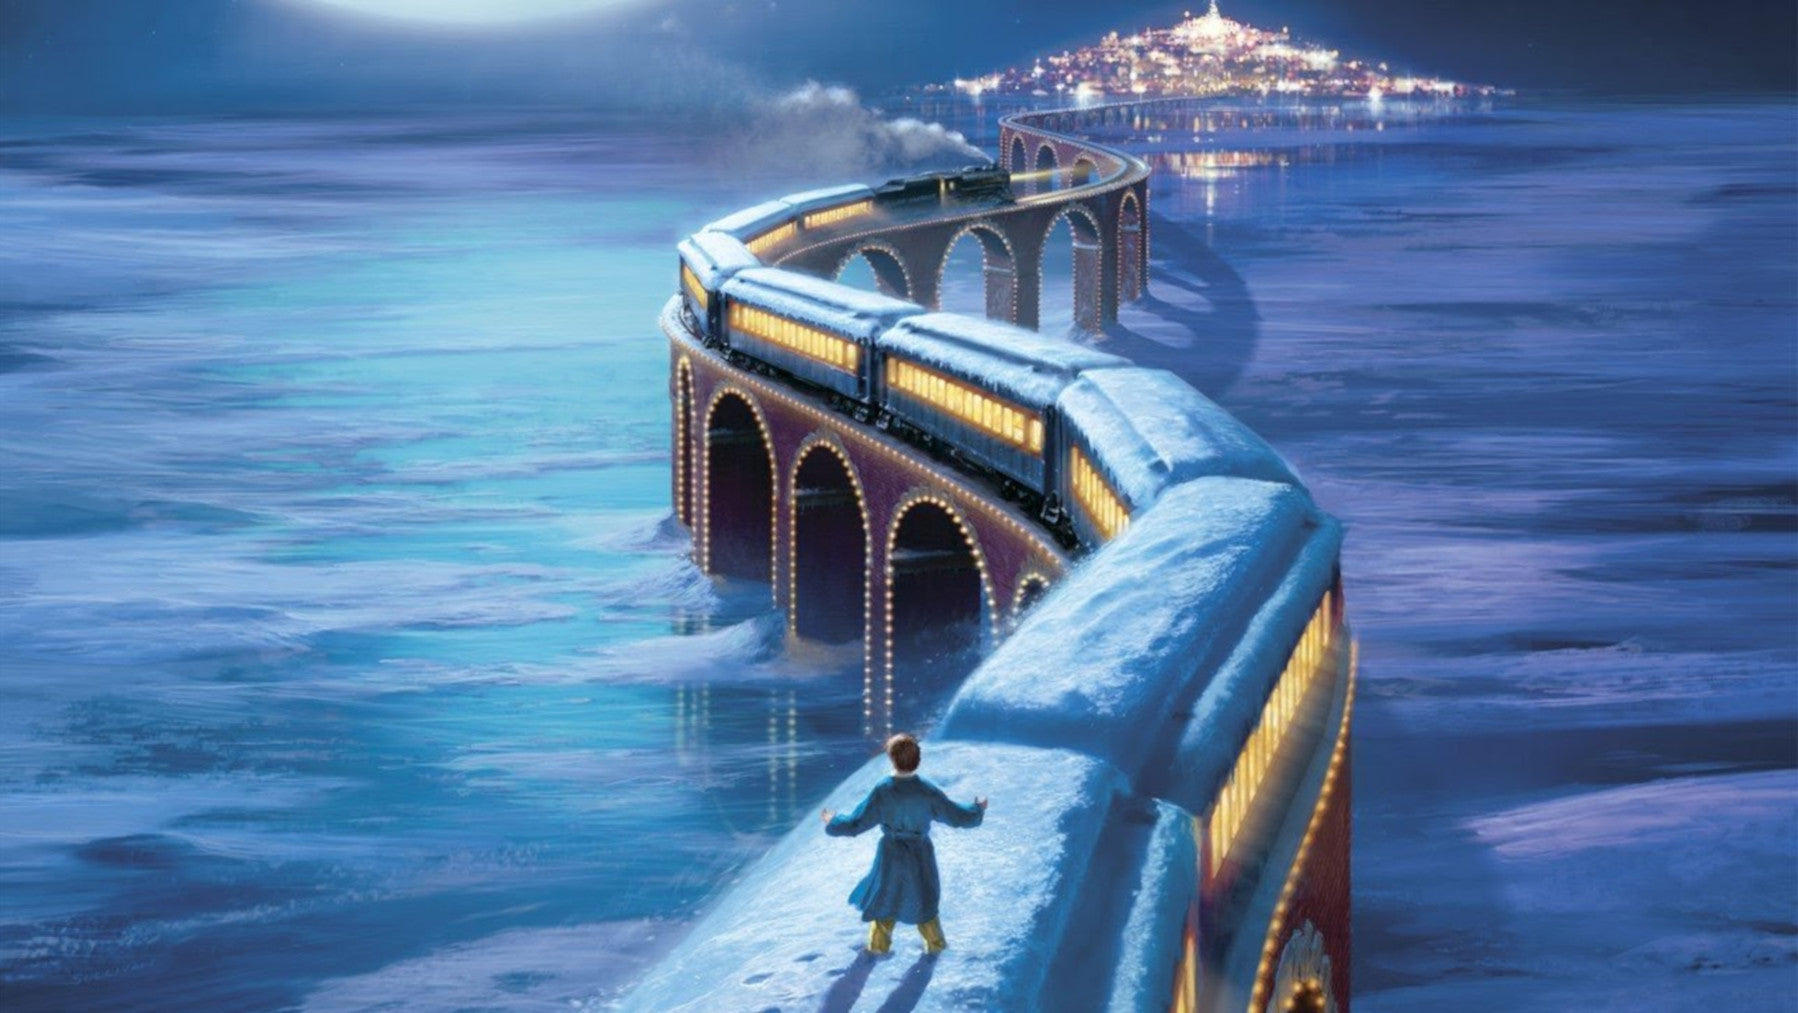 The Polar Express Christmas film